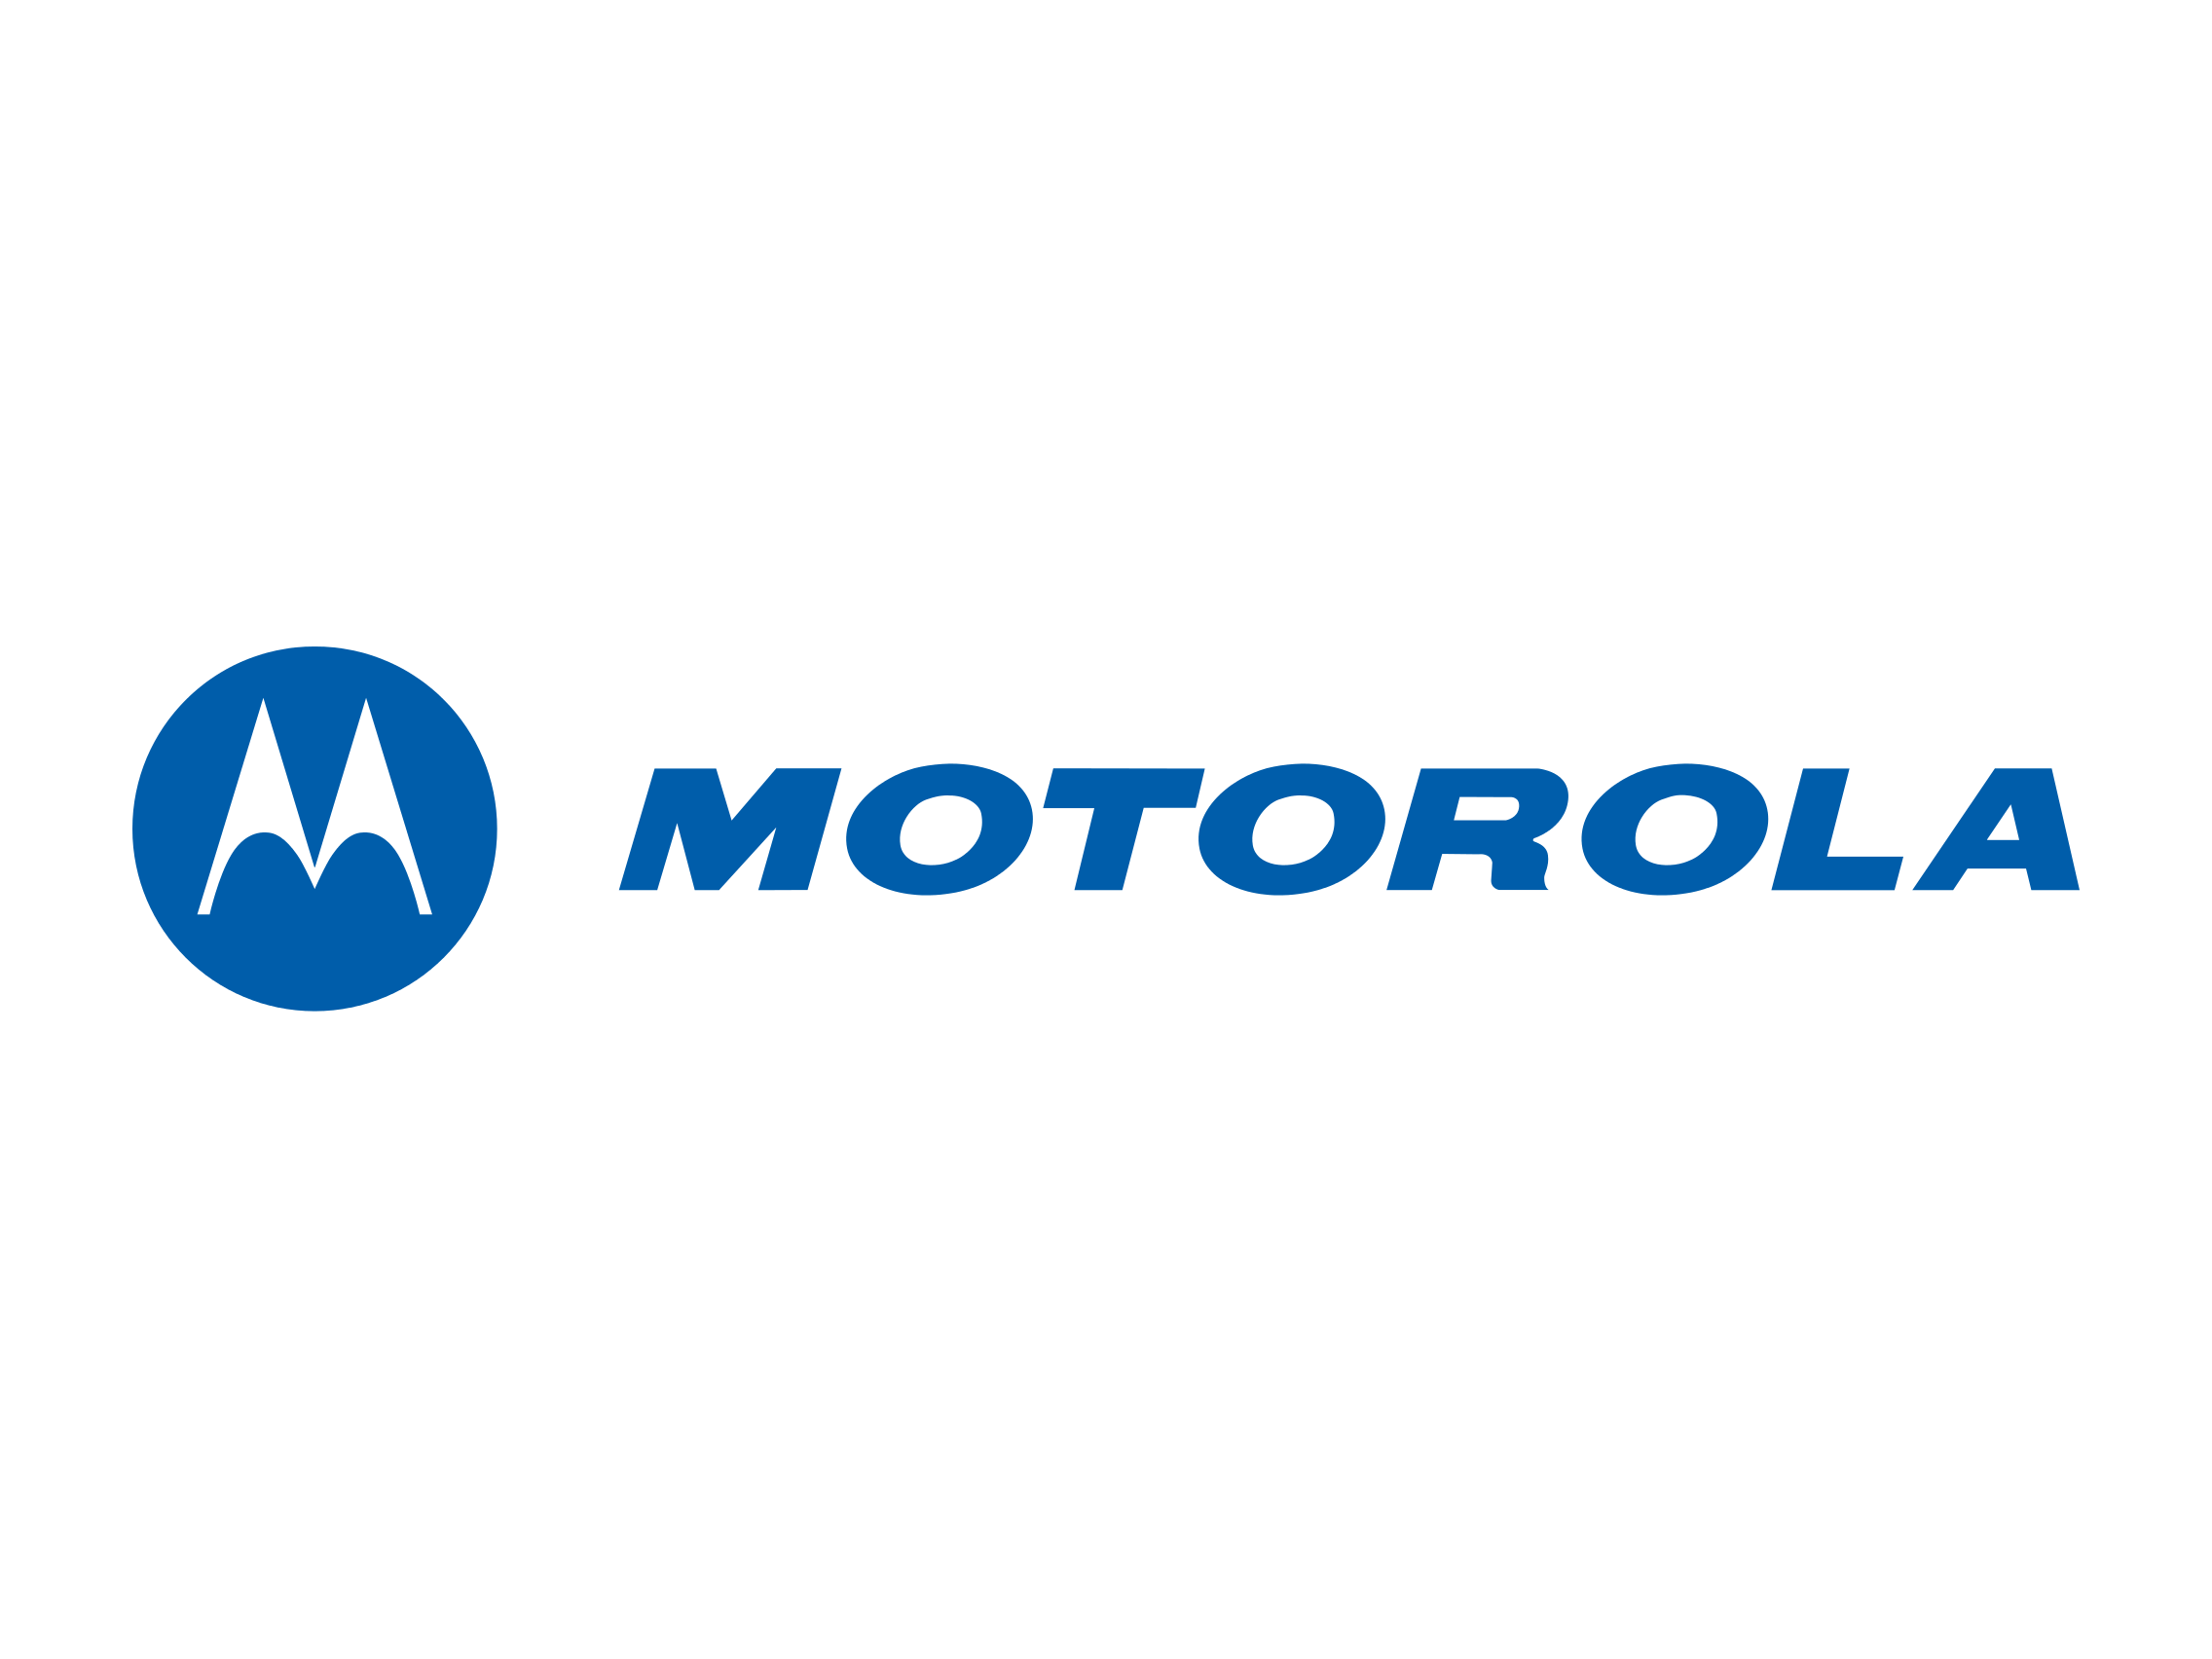 Motorola 2018 Logo - 